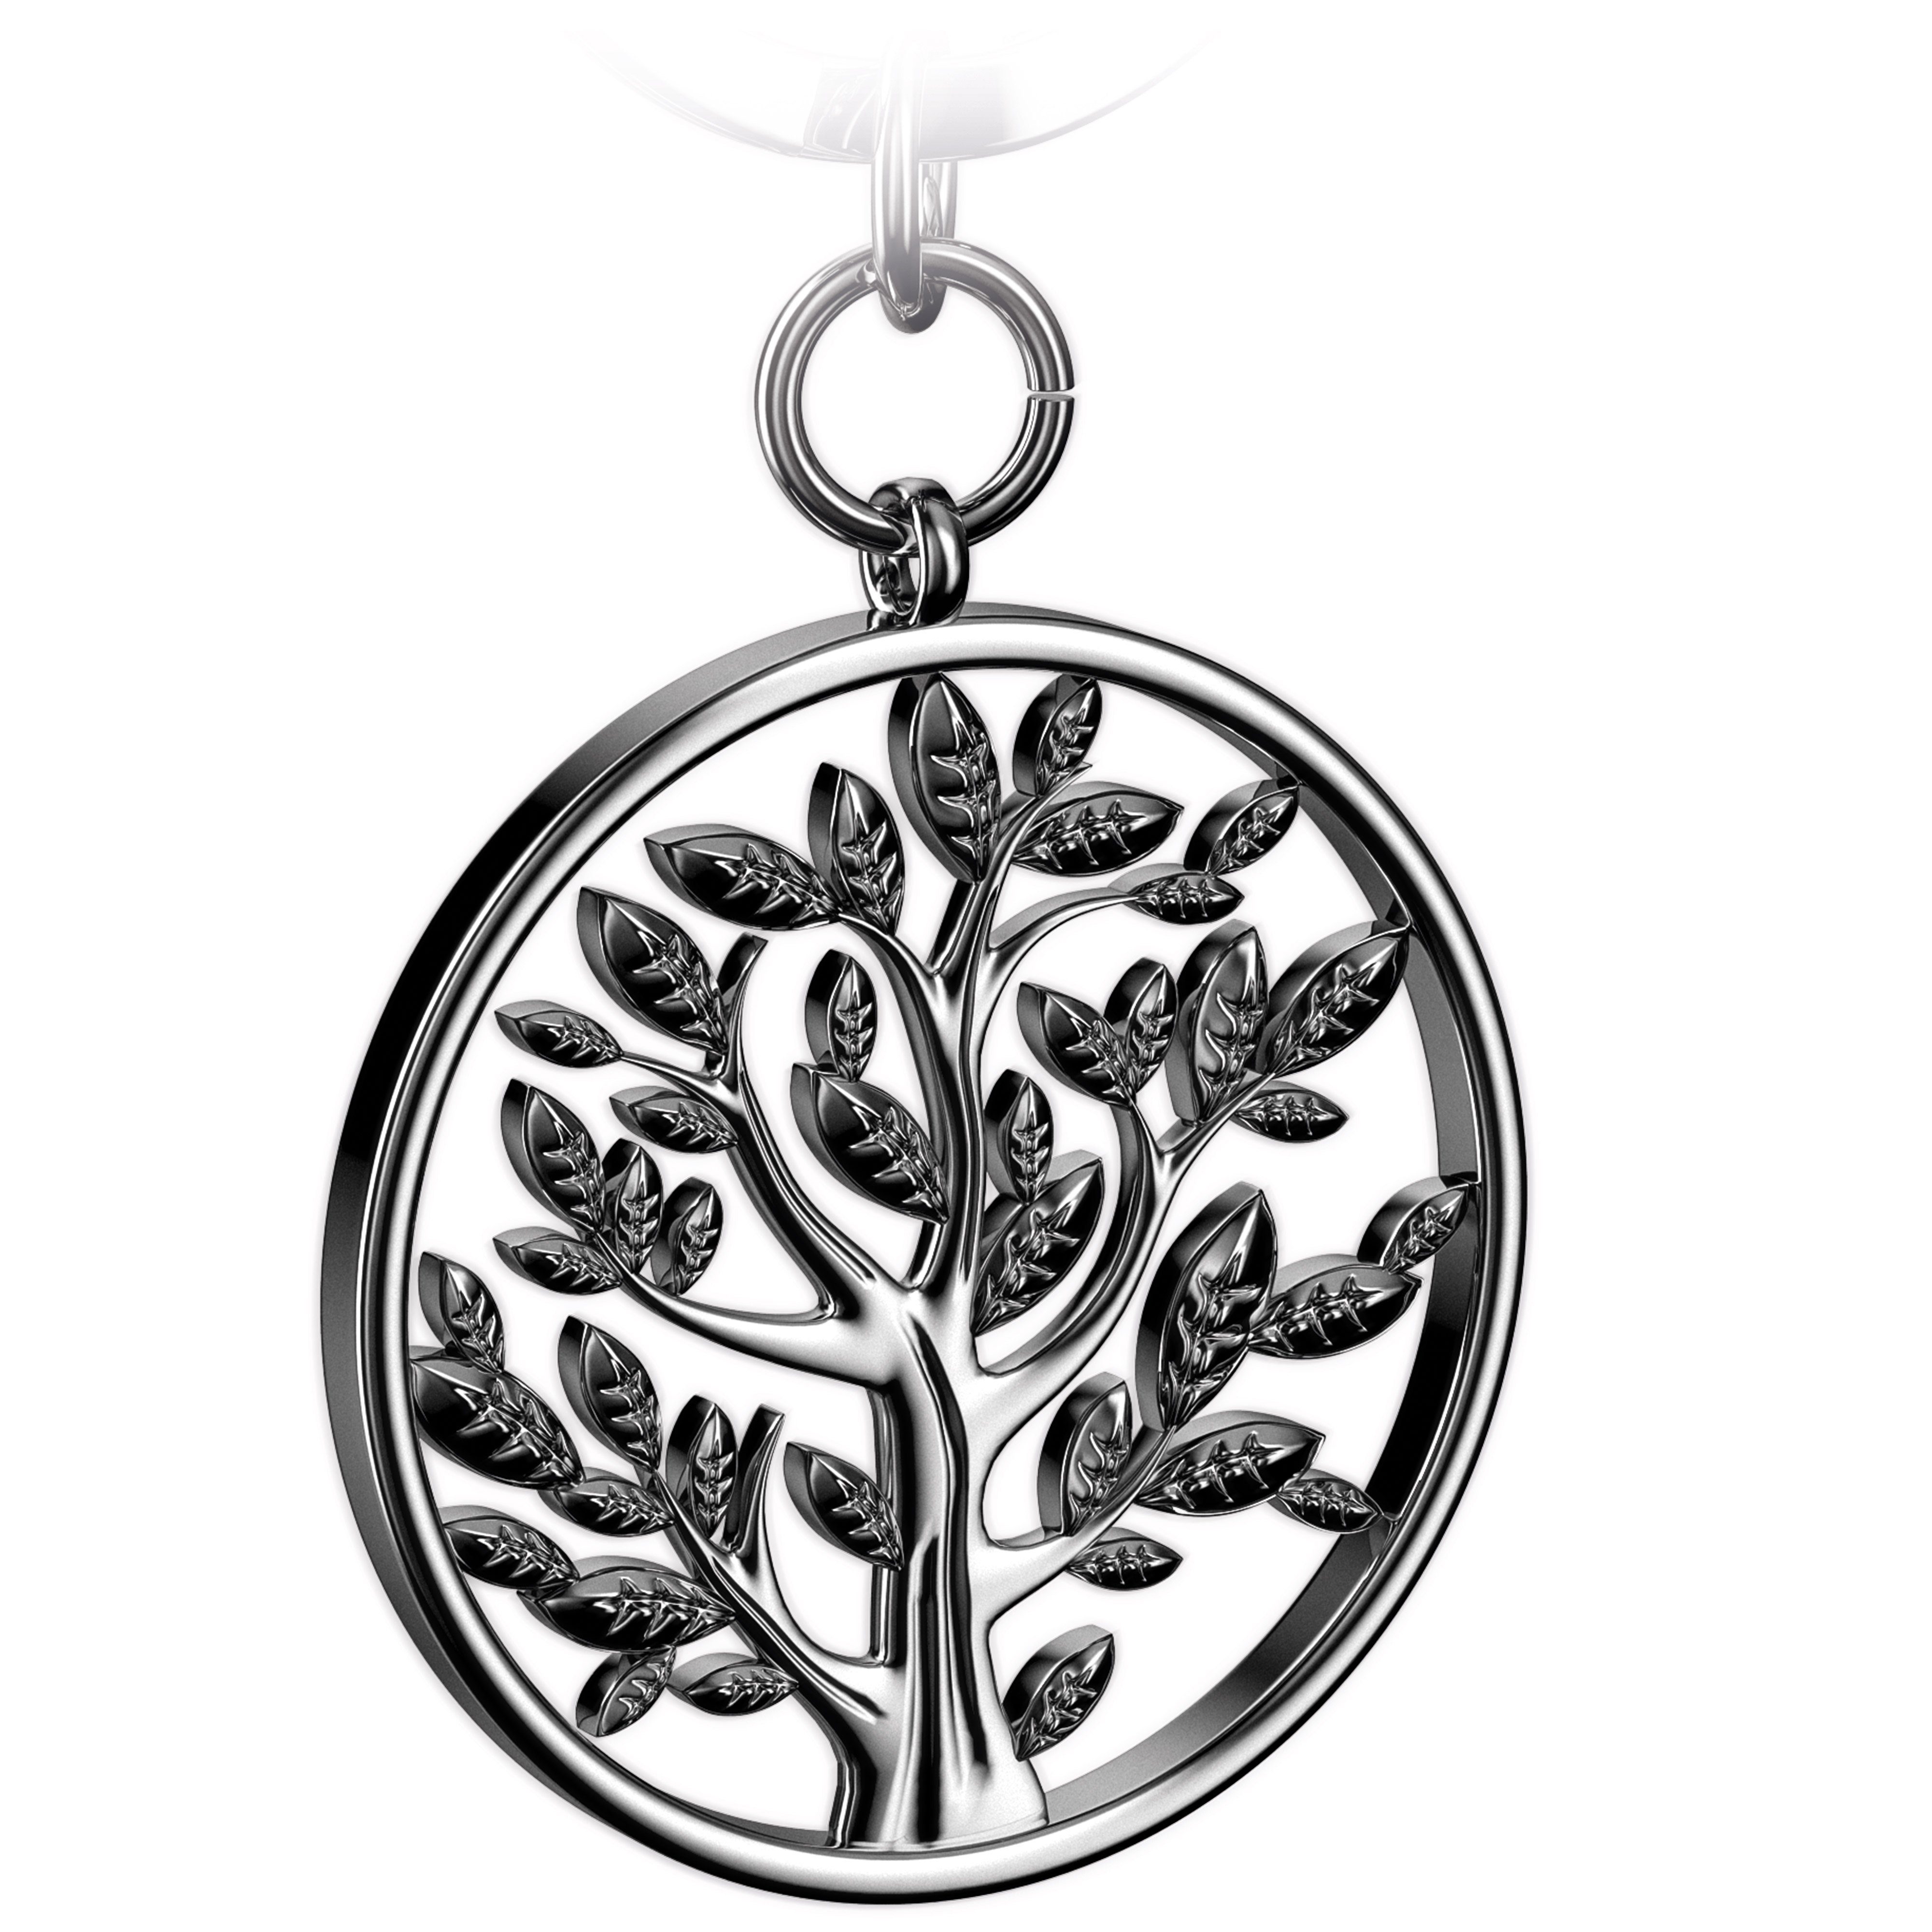 FABACH Schlüsselanhänger Lebensbaum "Spring" - Baum des Lebens Anhänger als Glücksbringer